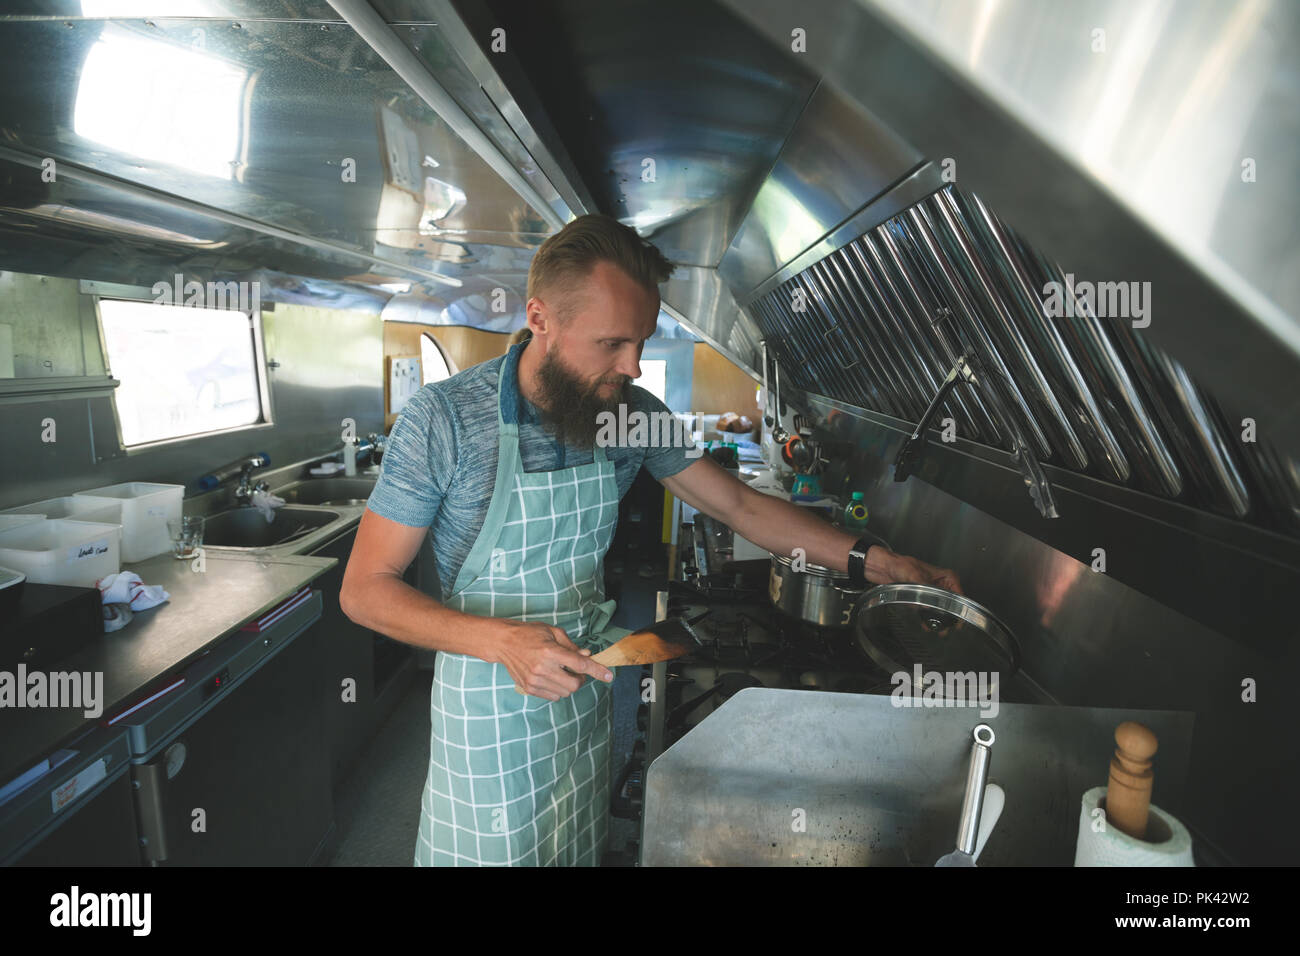 Waiter preparing food in food truck Stock Photo